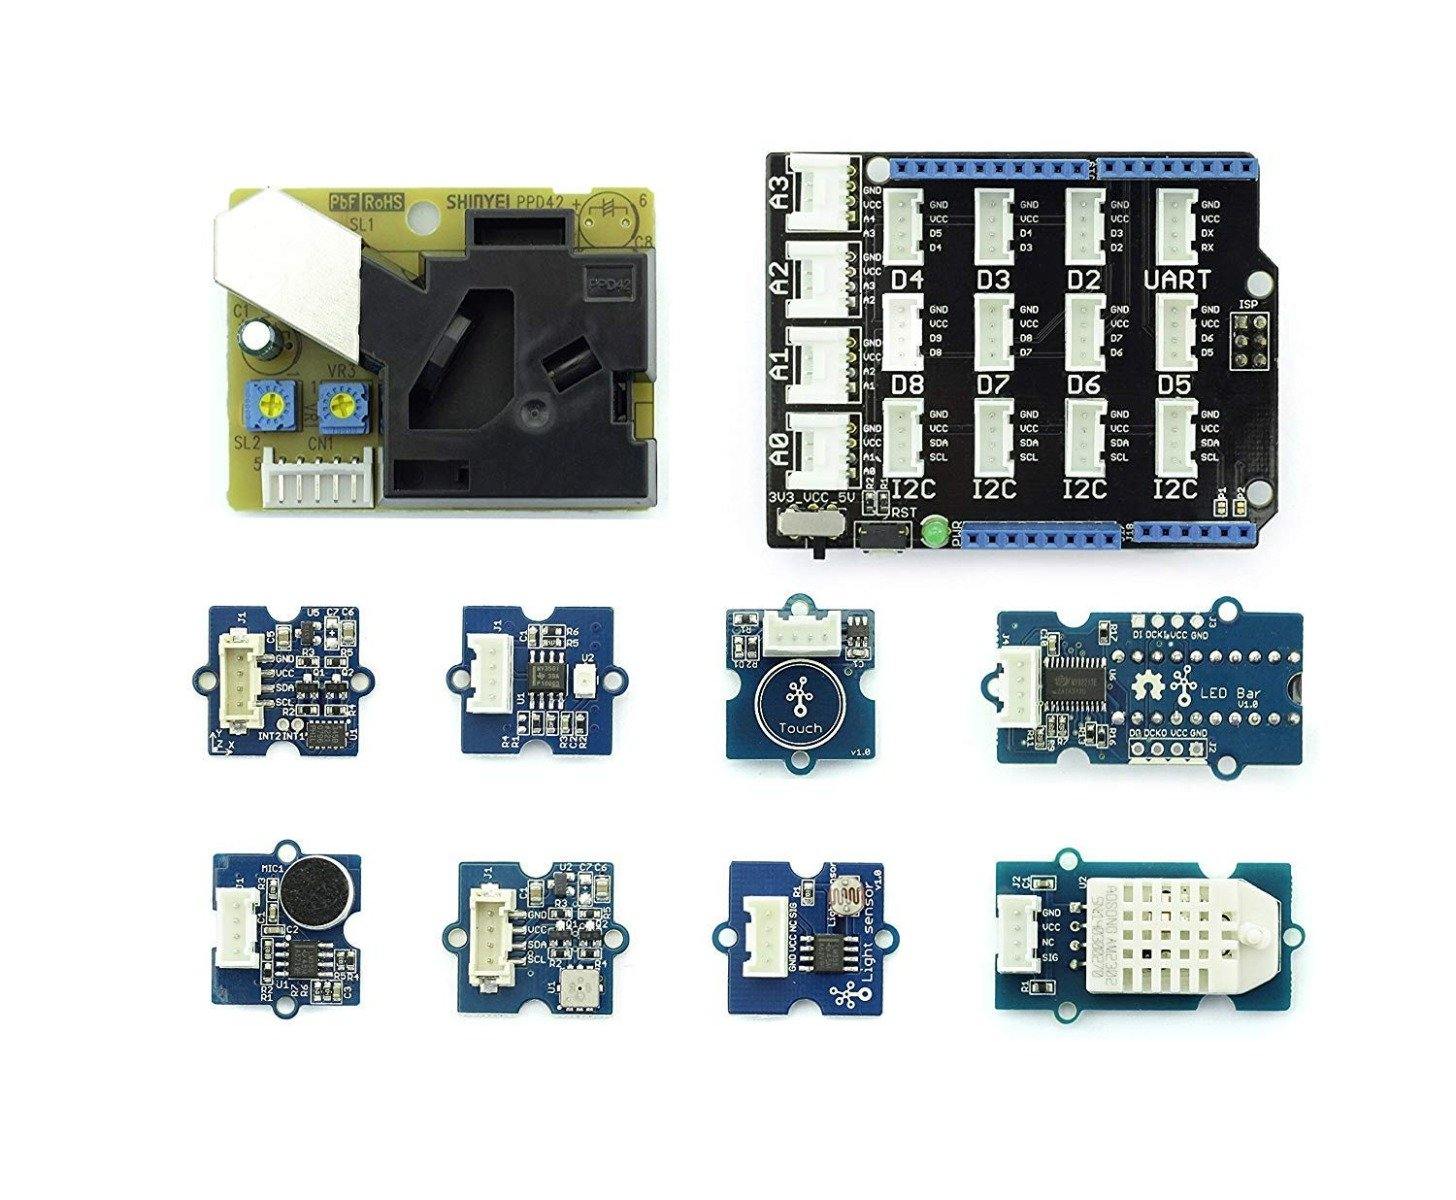 Grove Starter IoT Kit-Robocraze